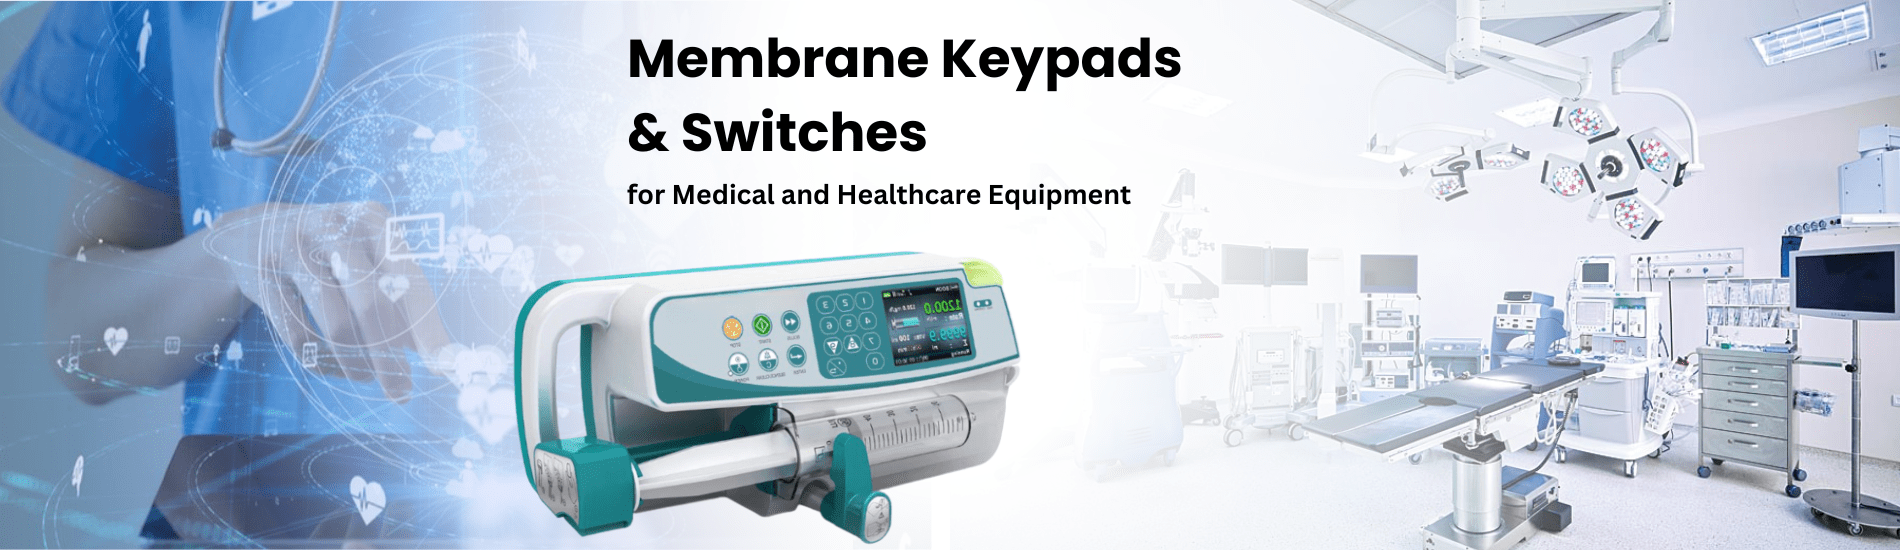 membrane keypads for medical devices